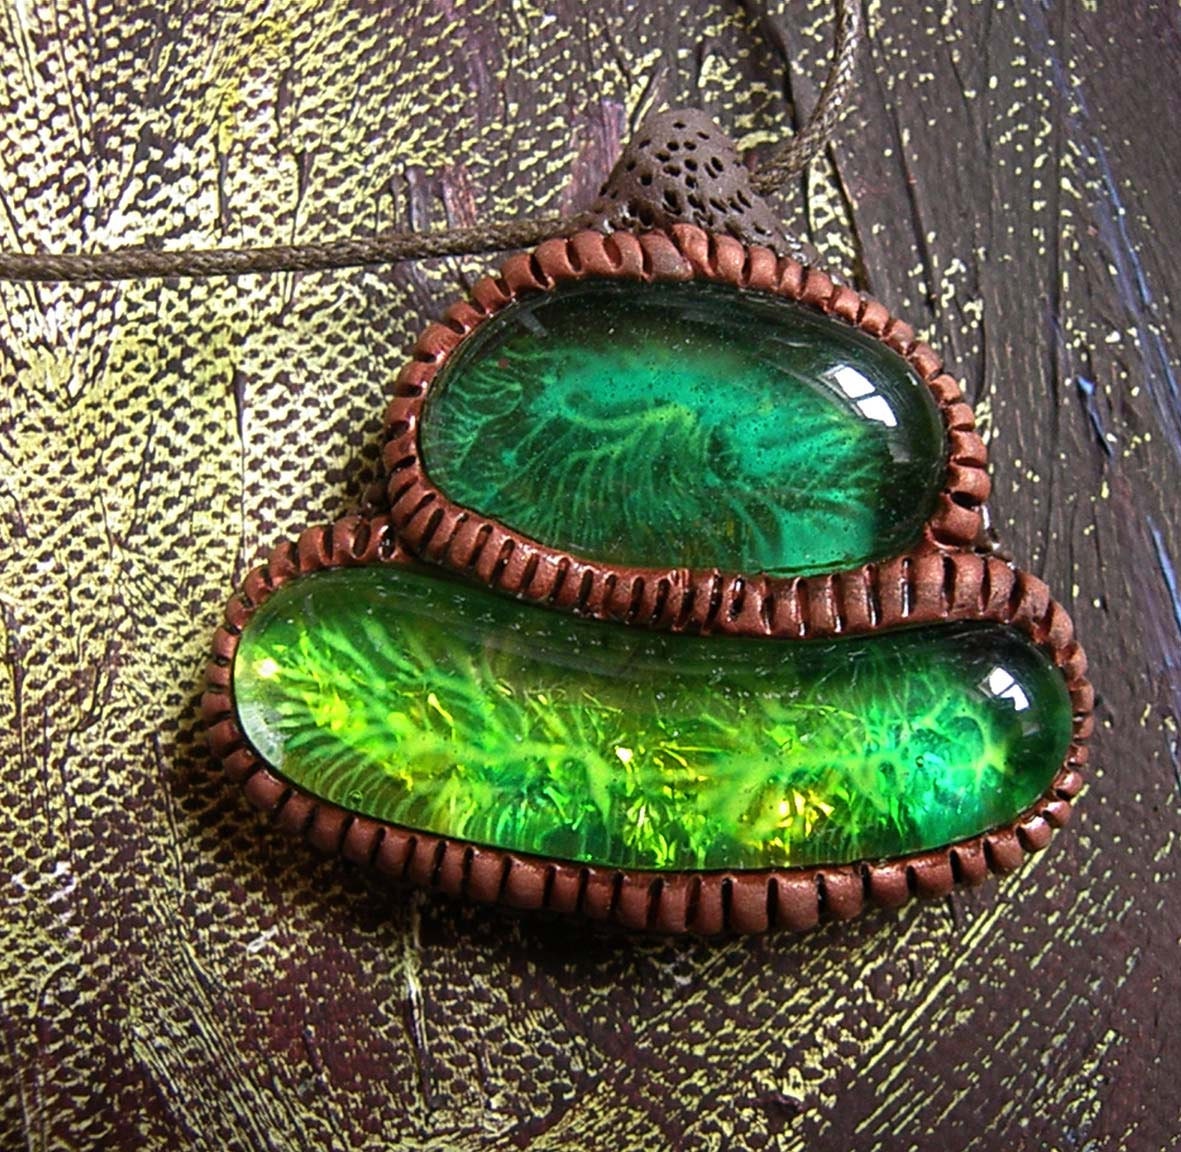 Black Light Glass Pendant Psychedelic Fluorescent Tribal Hippie Psytrance Jewelry Organic Gypsy Mens Necklace